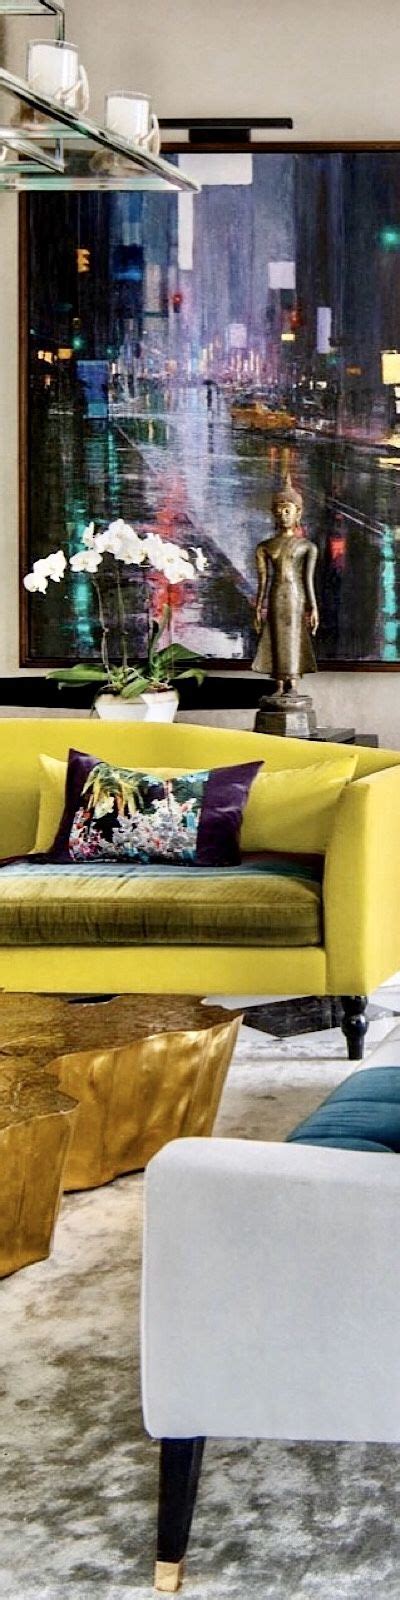 Luxury Interior Modern Interior Couch Architecture Furniture Home